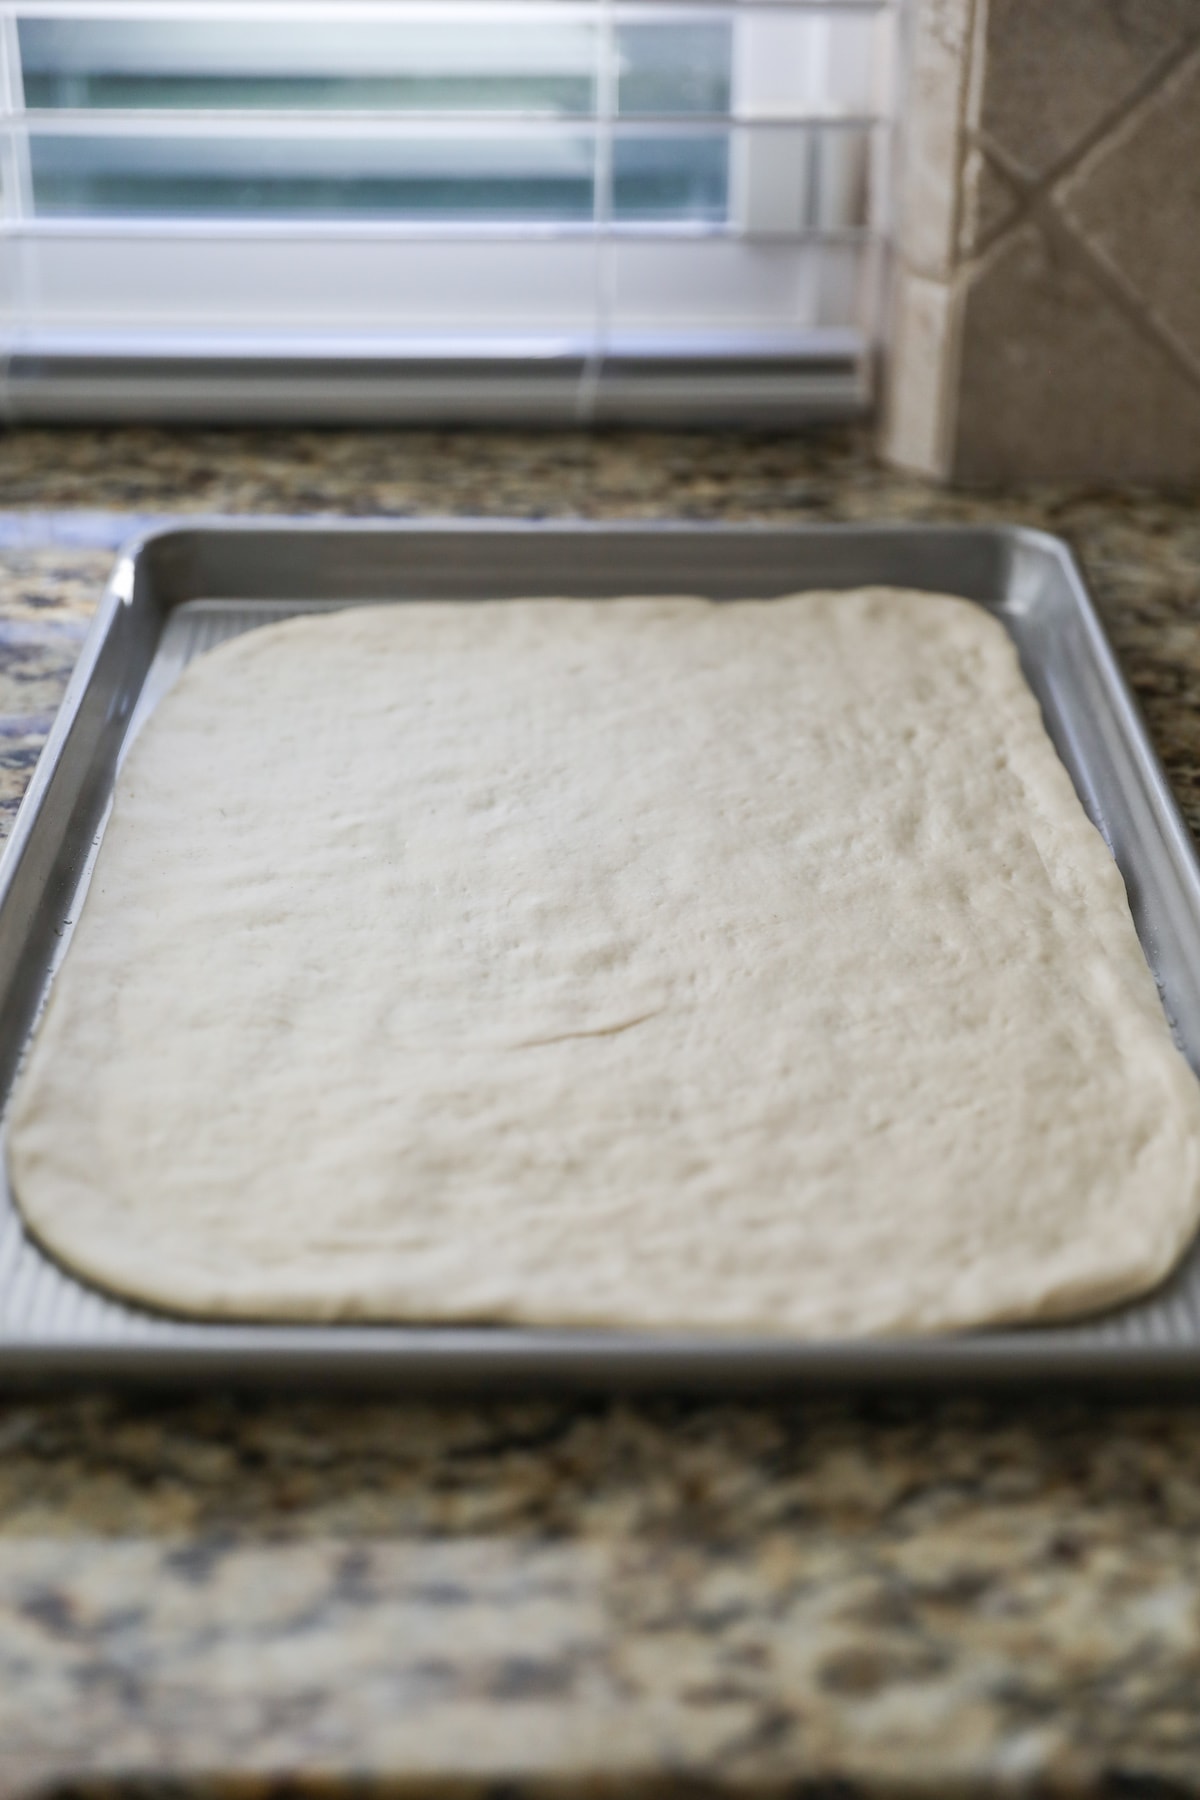 pizza dough on baking sheet